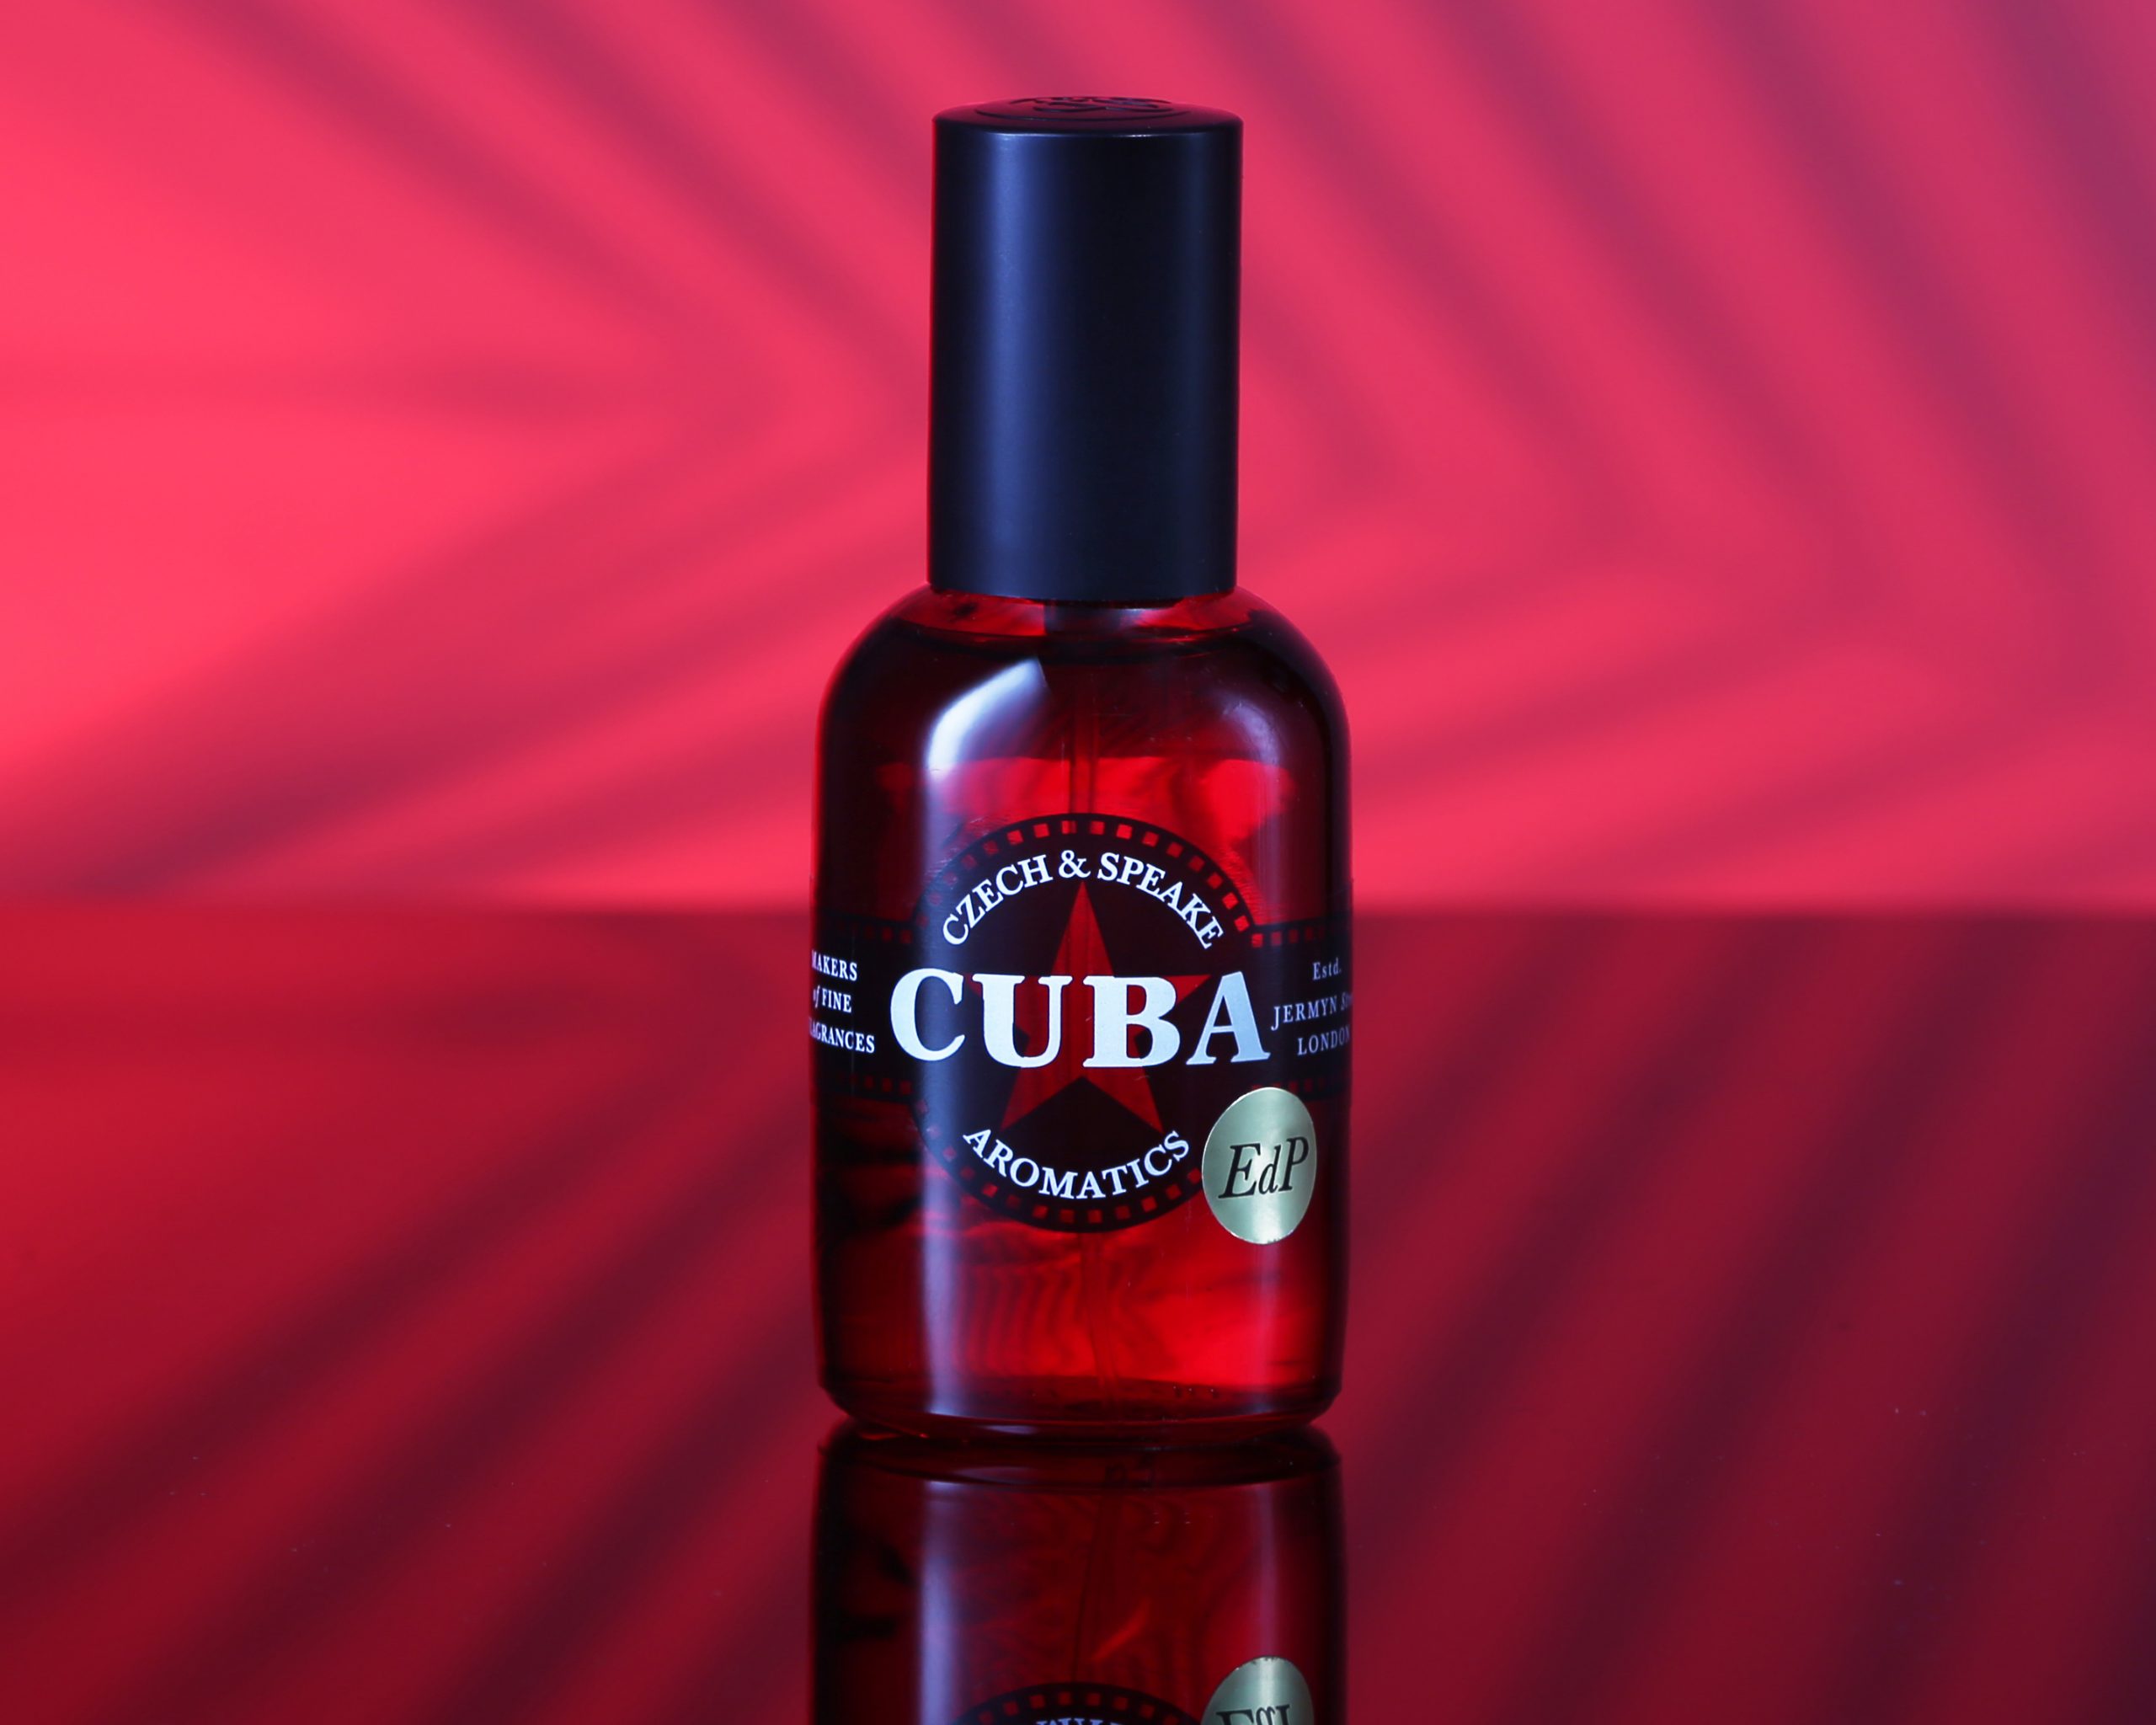 Czech & Speake Cuba Eau de Parfum 50ml red with palm leaf